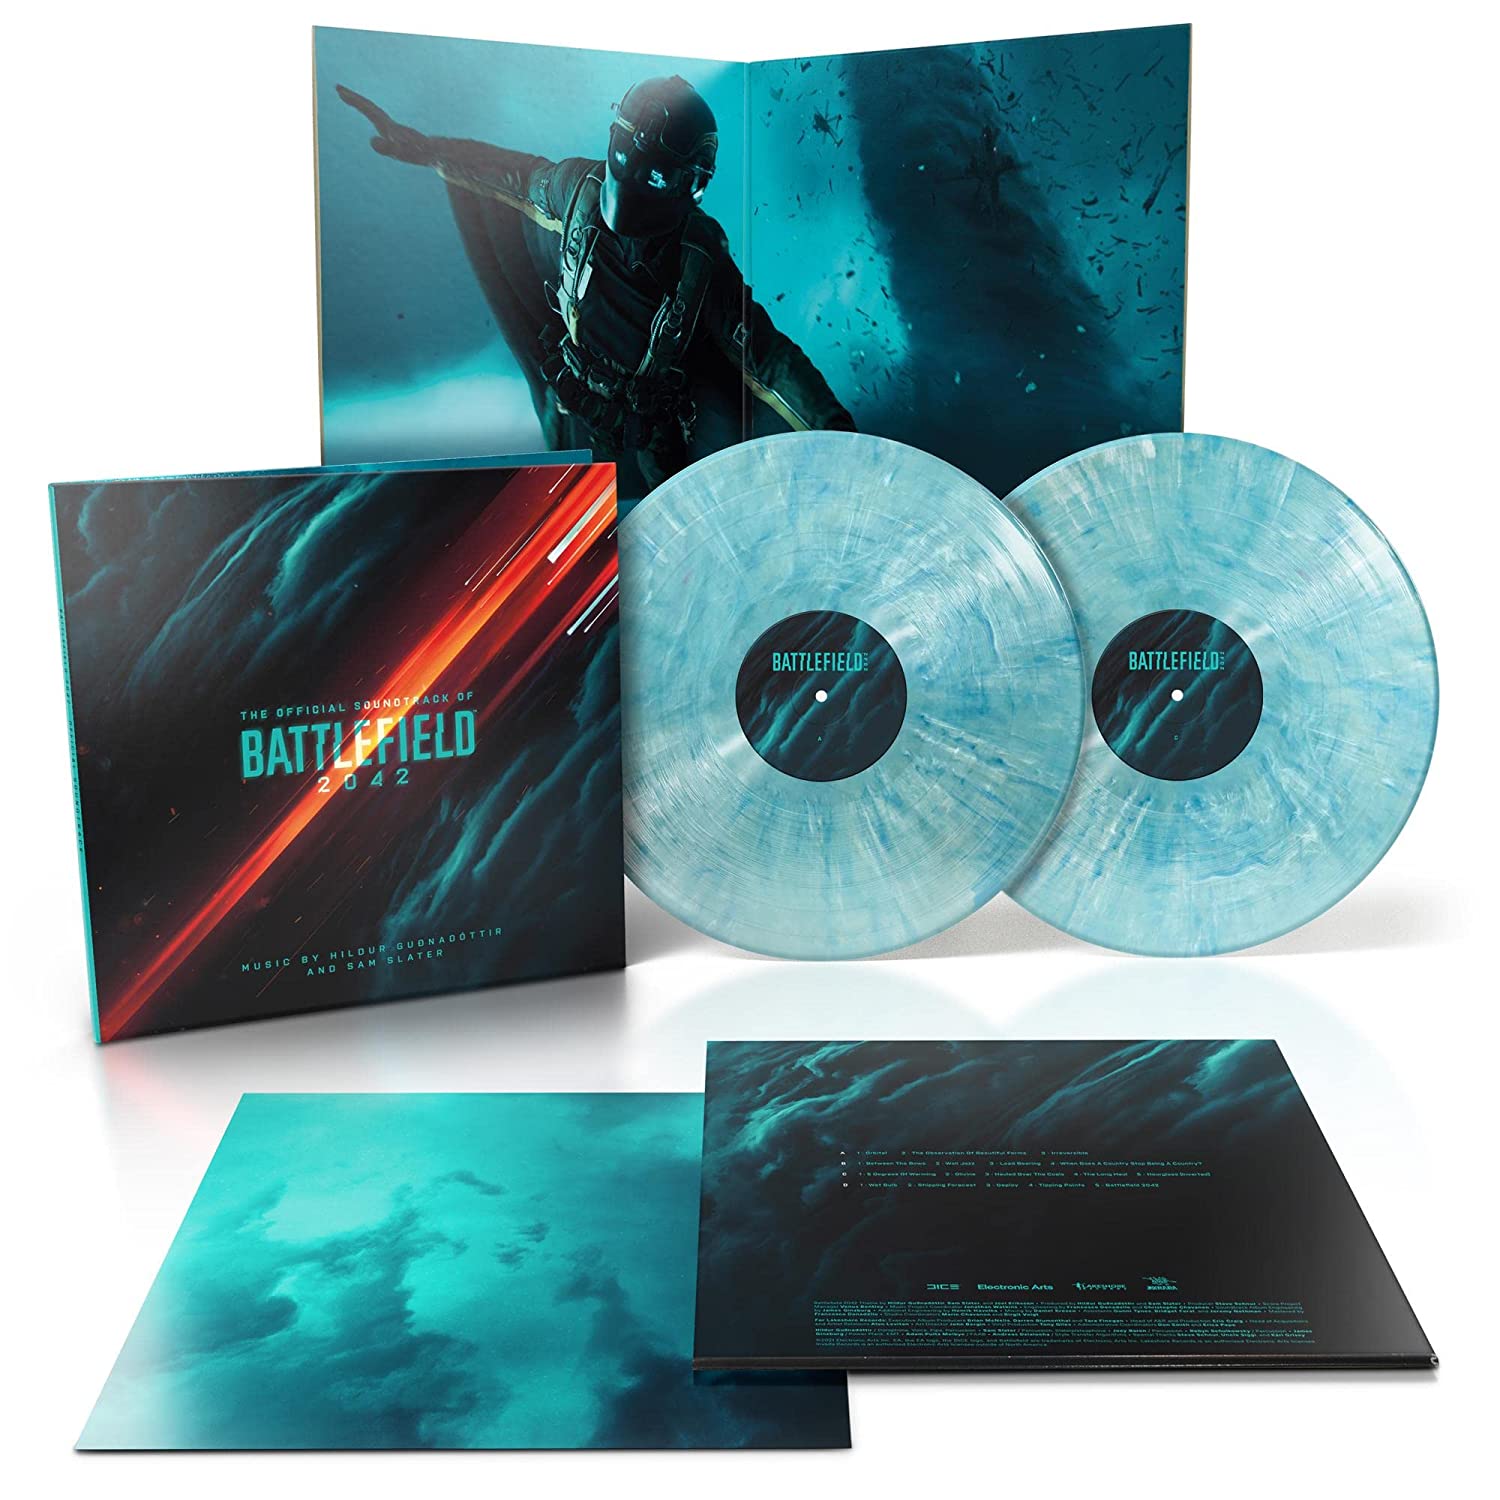 [DAMAGED] Hildur Guenadottir - Battlefield 2042 (Official Soundtrack) [Blue w/ White Burst Vinyl]